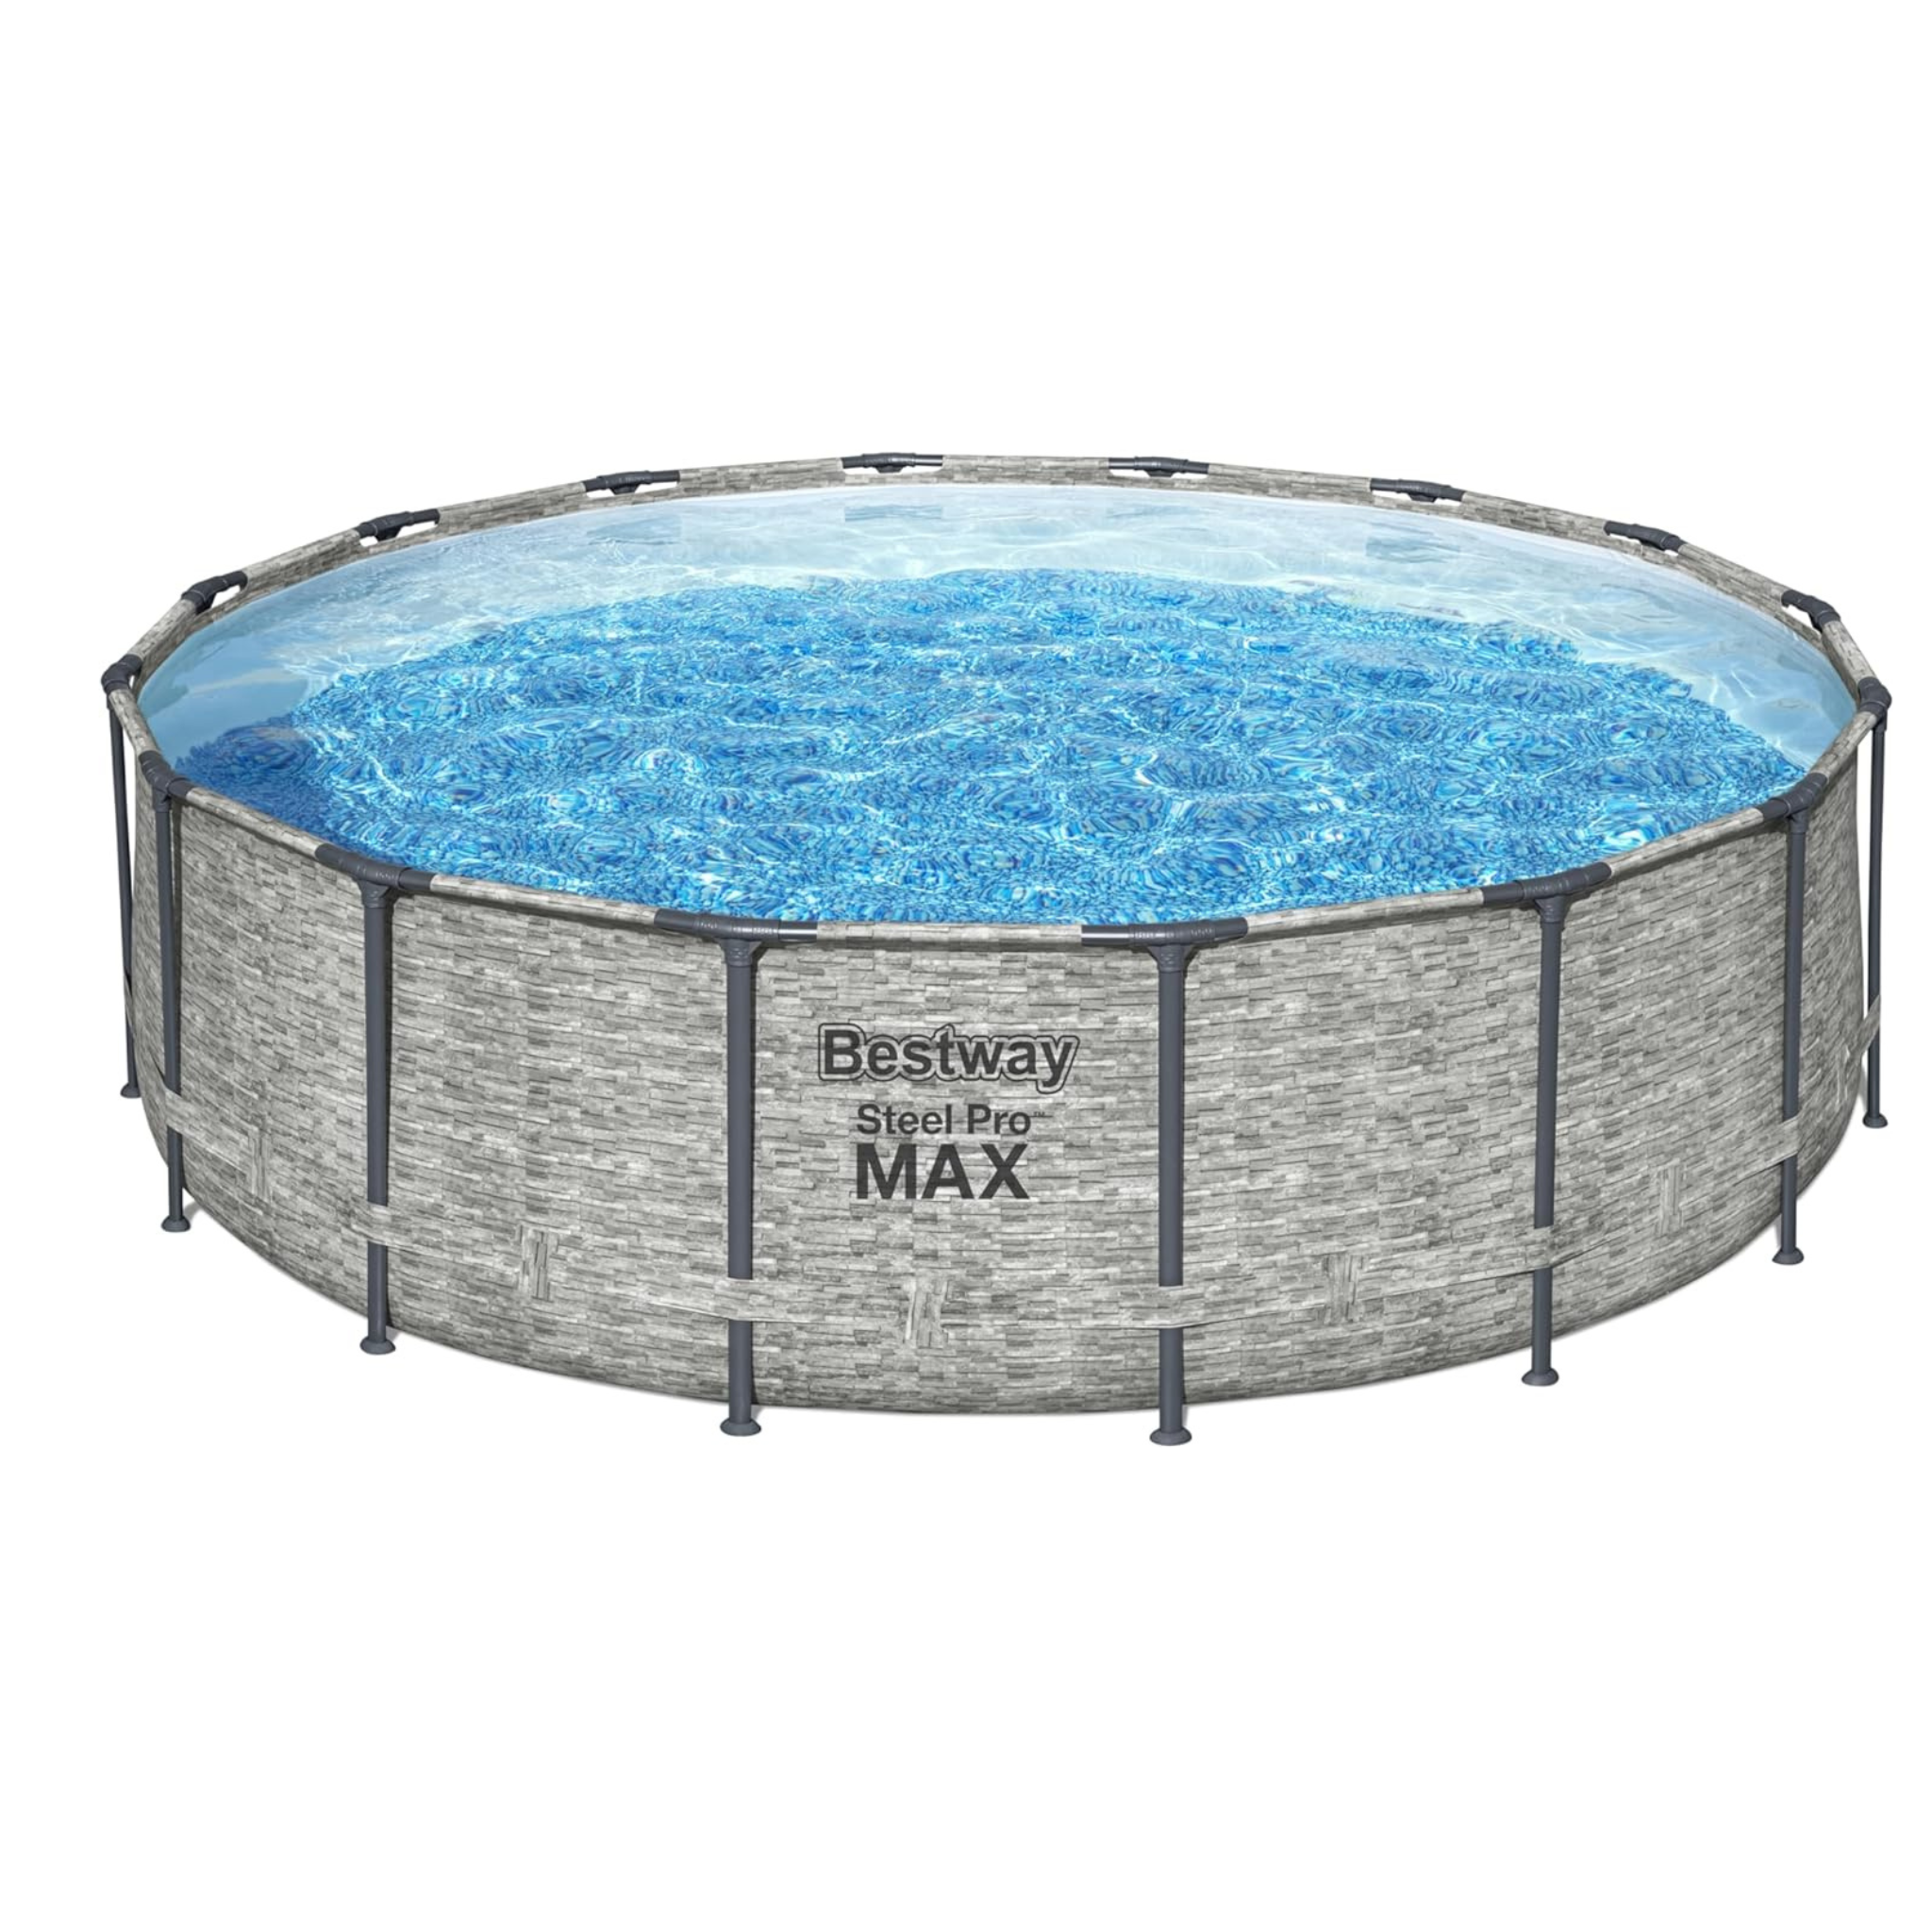 Bestway Steel Pro MAX Above Ground Swimming Pool Set